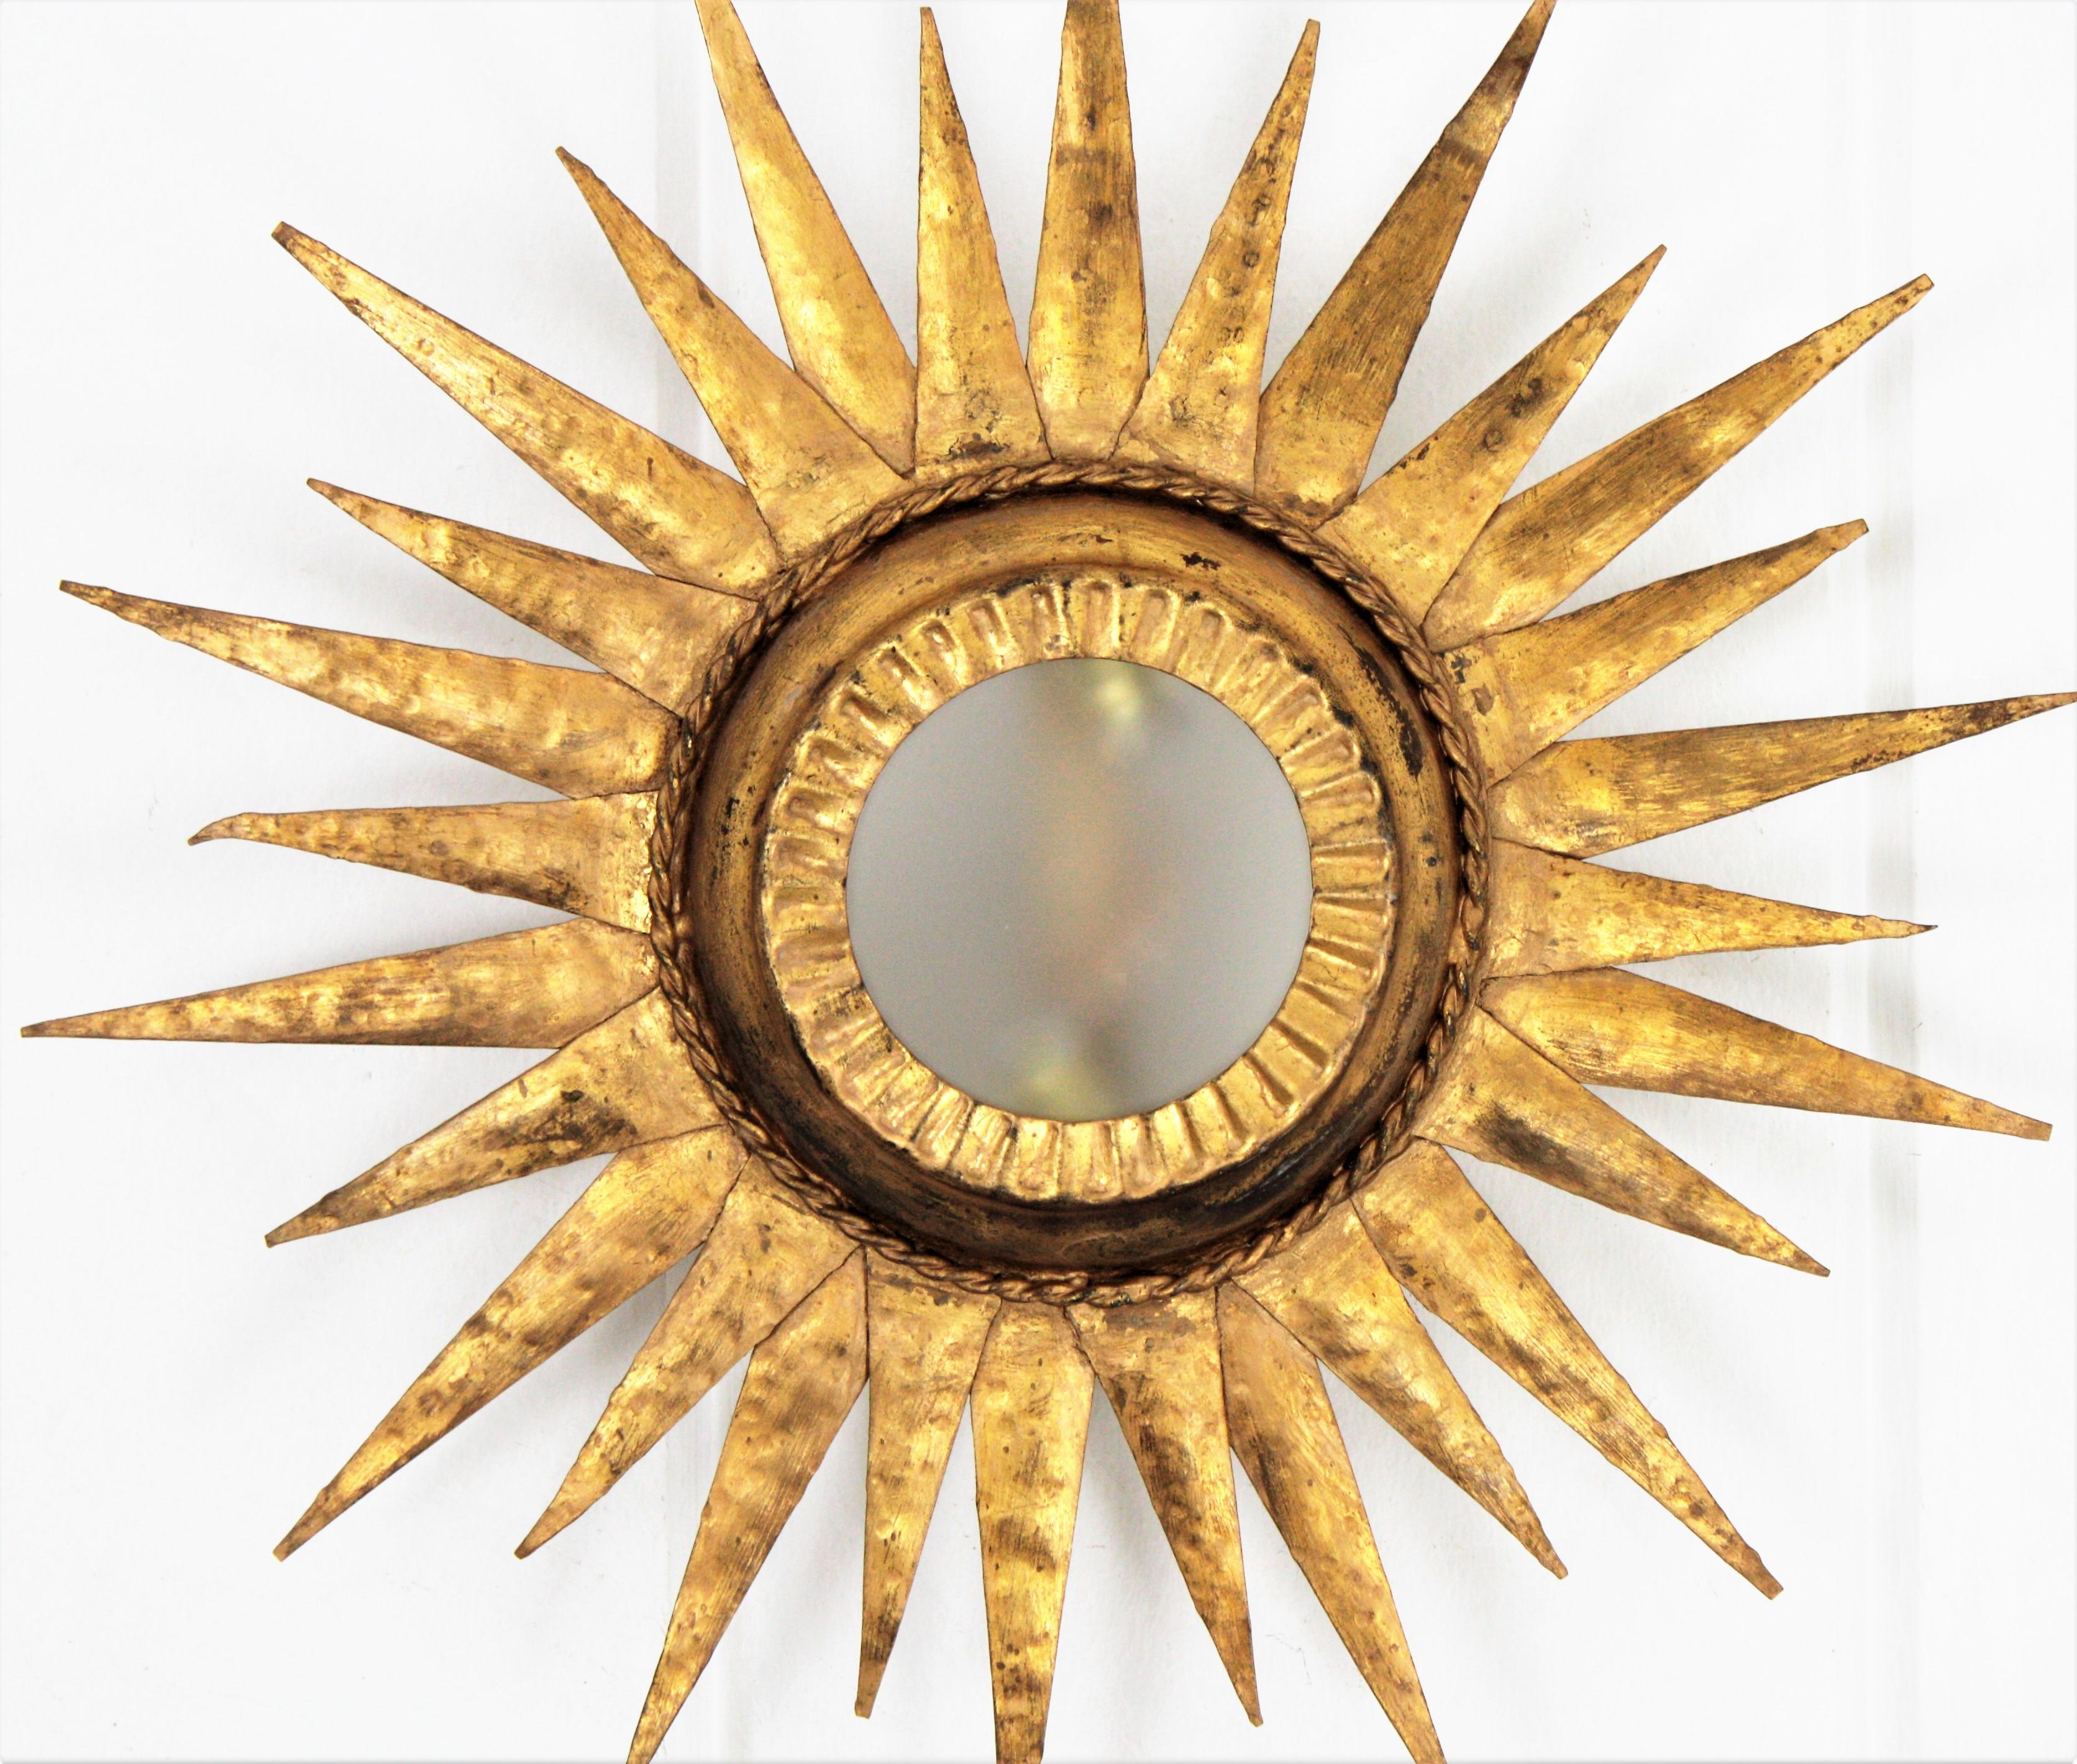 Hand-Crafted Sunburst Ceiling Light Fixture or Wall Sconce / Sunburst Mirror,  Gilt Iron